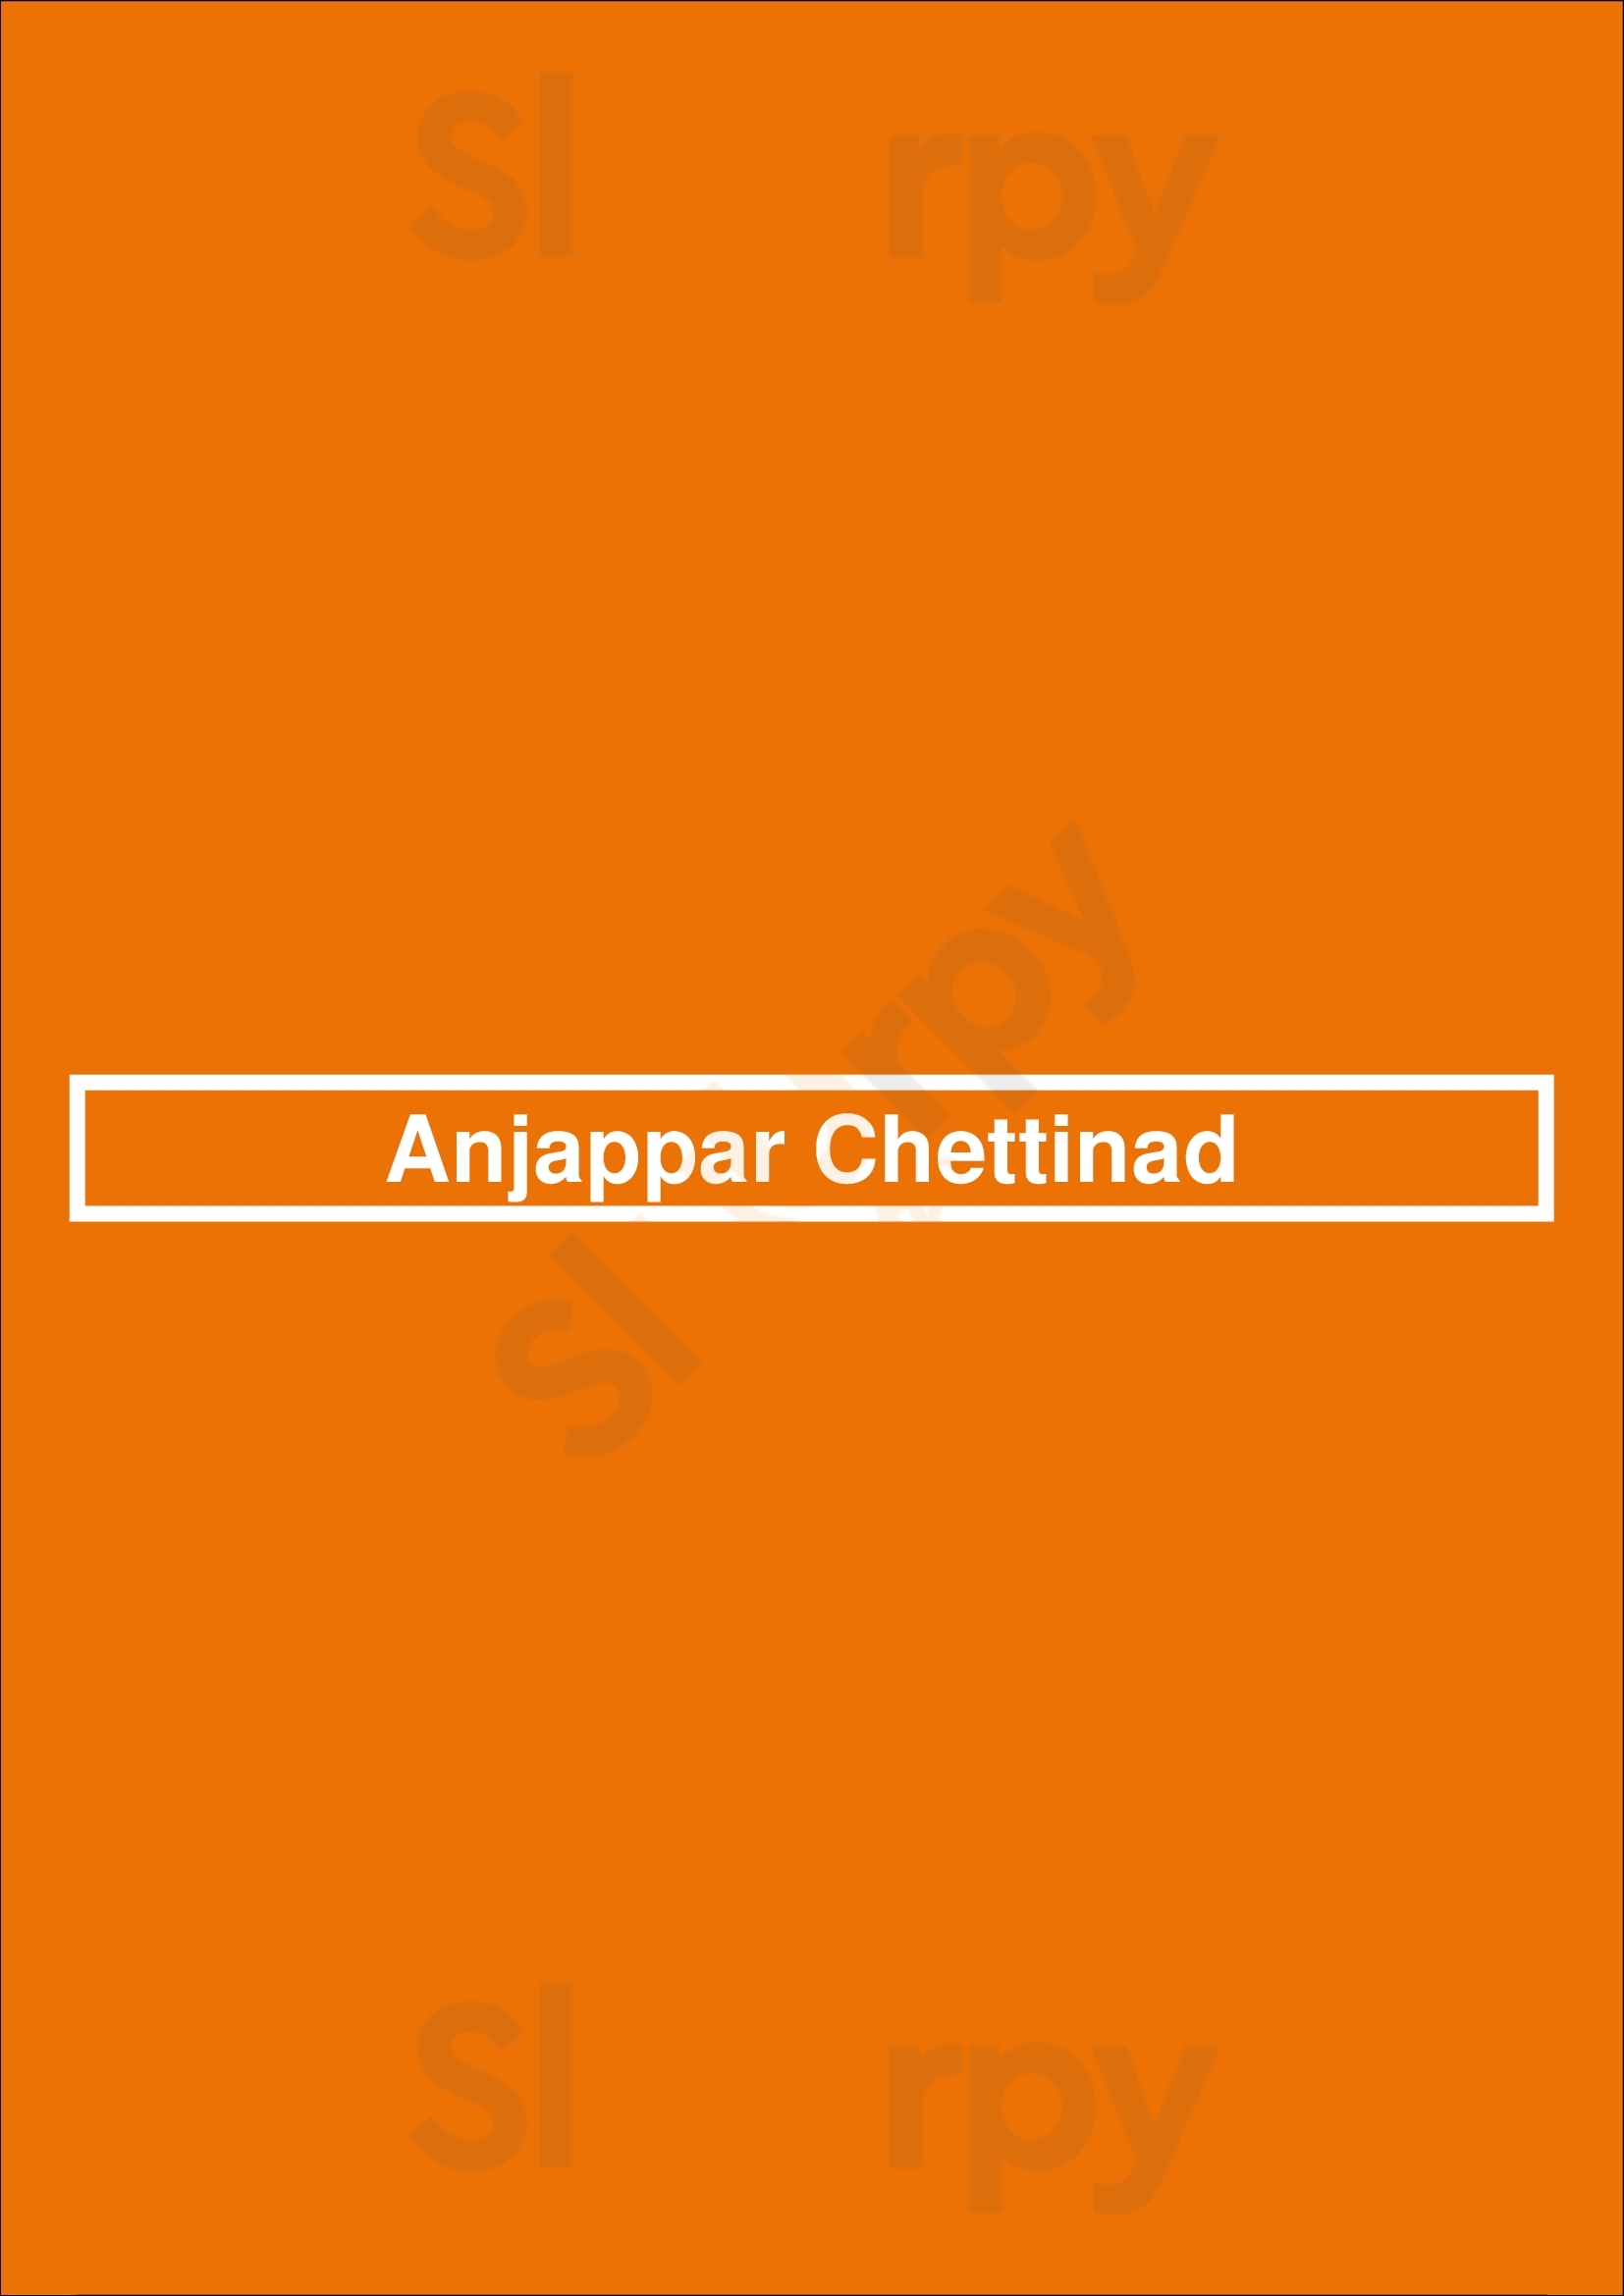 Anjappar Chettinad Brampton Menu - 1